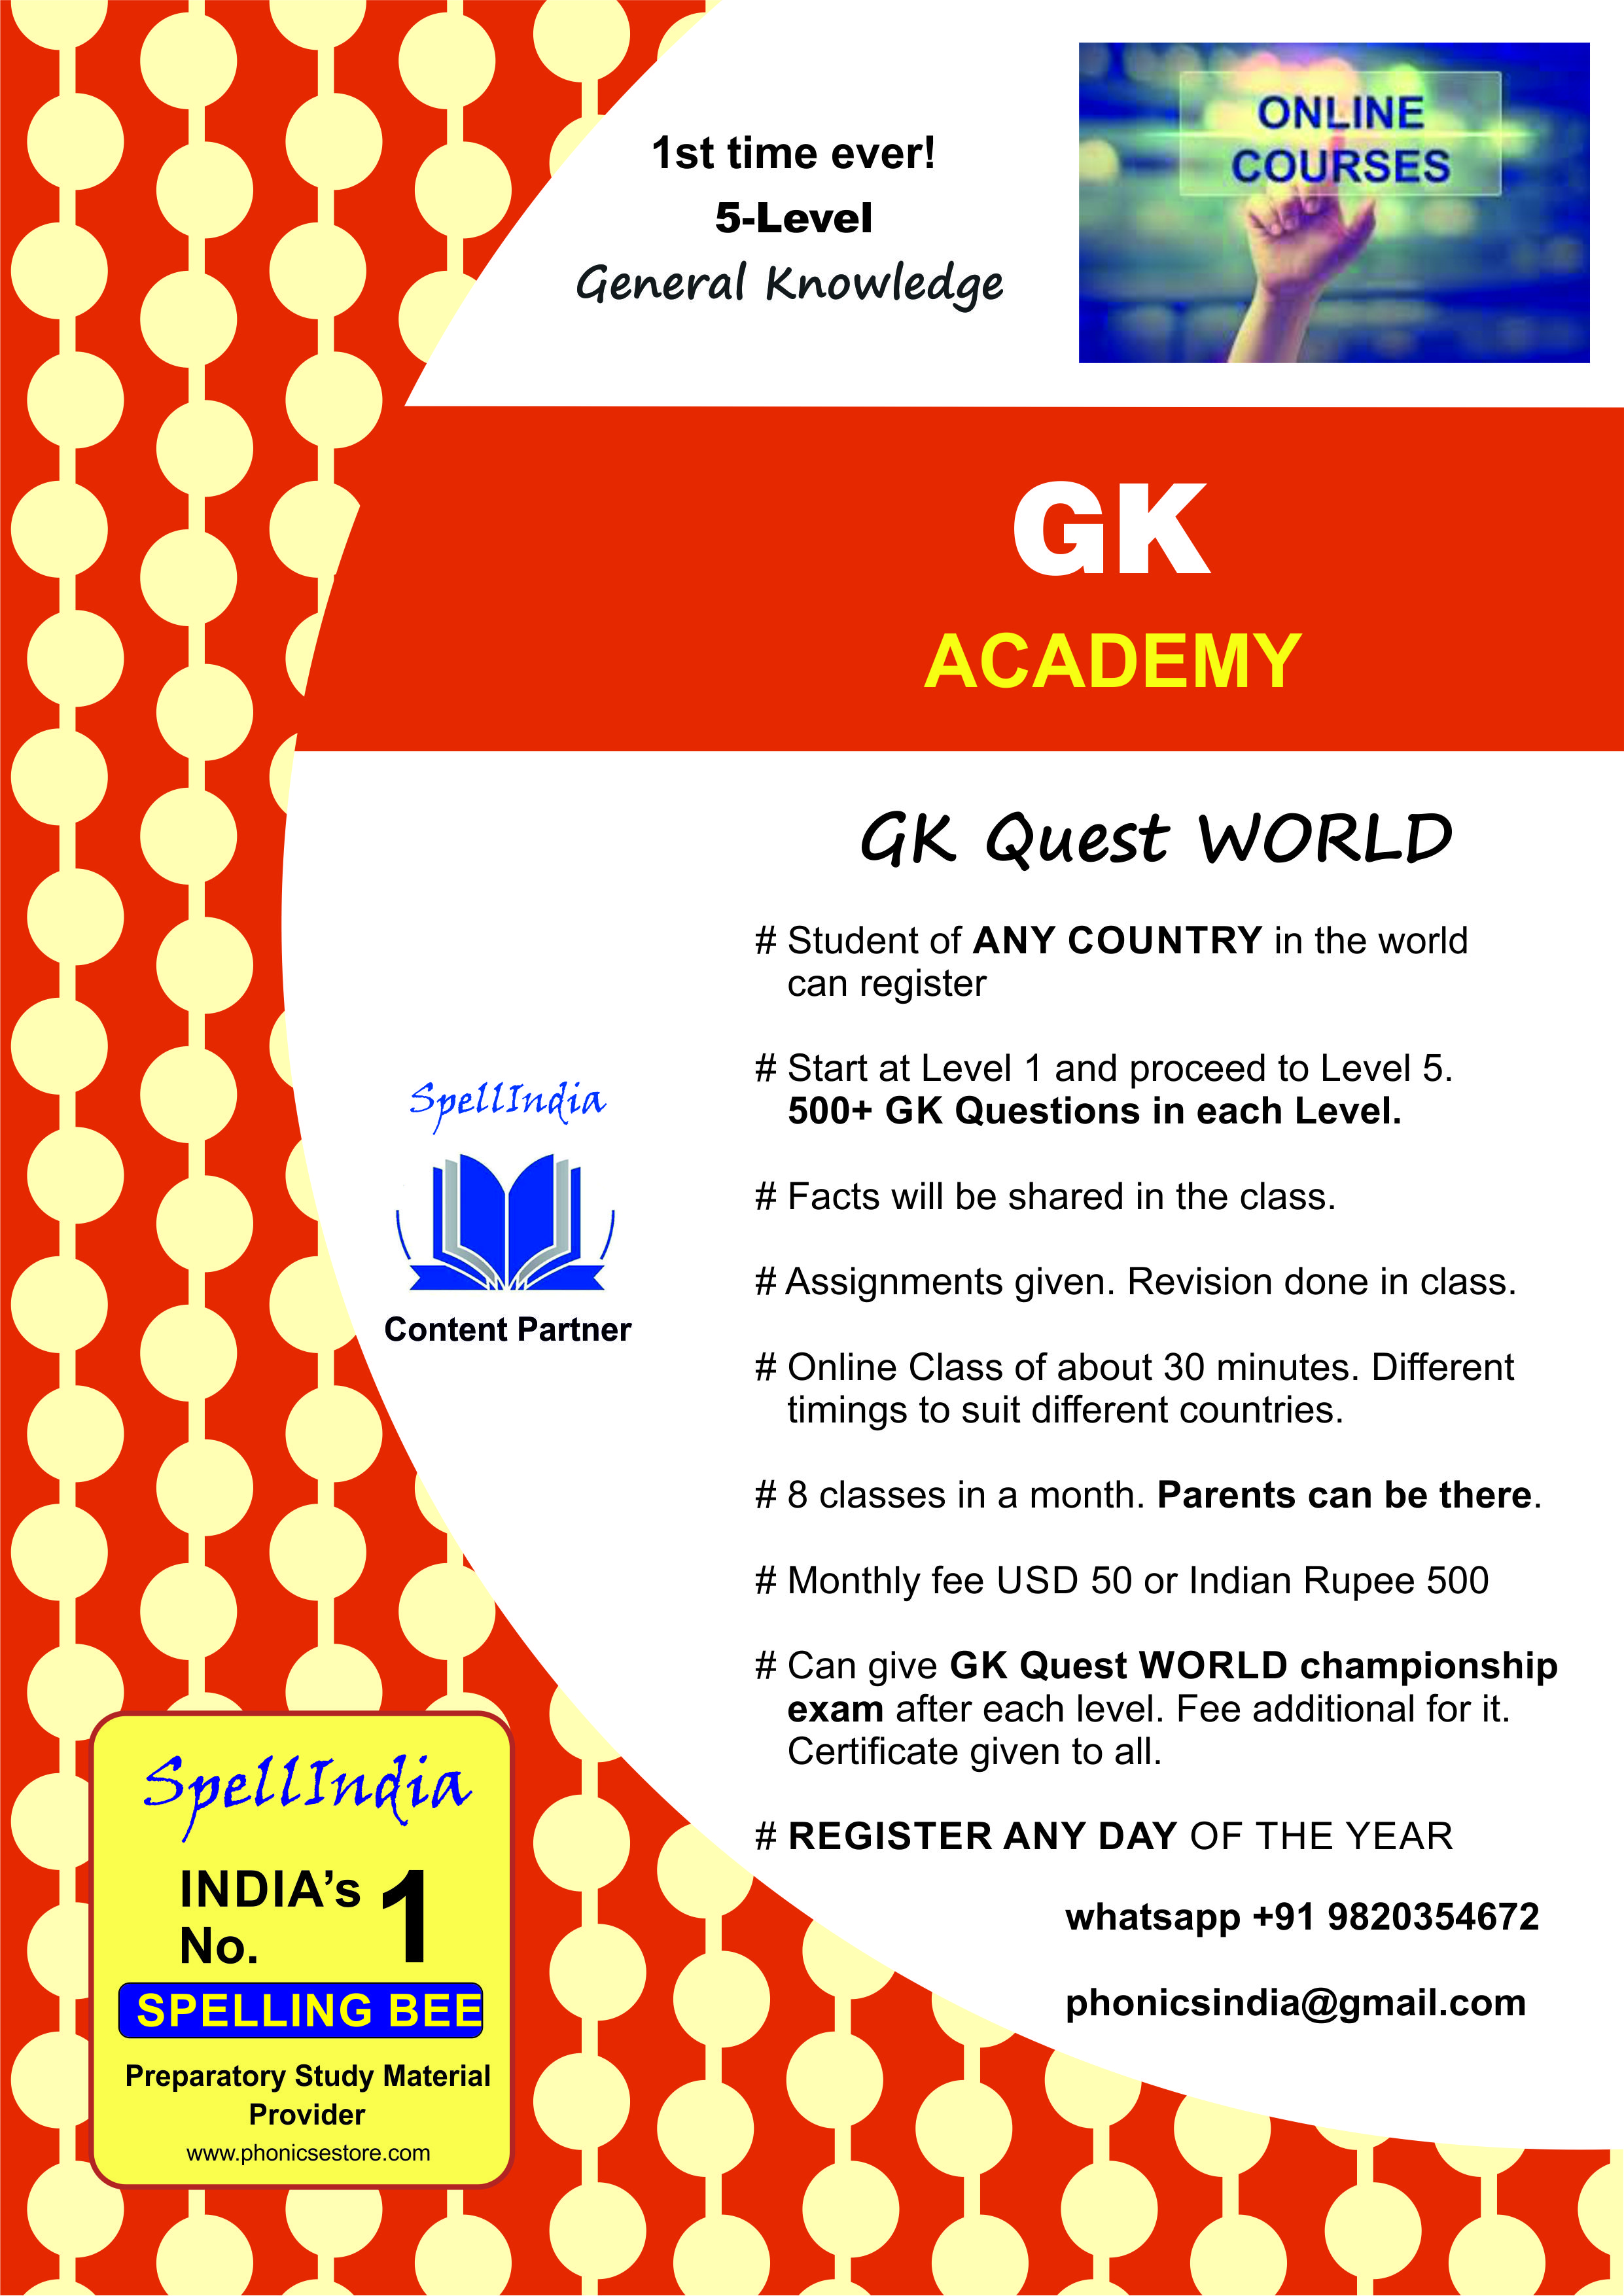 GK General Knowledge classes